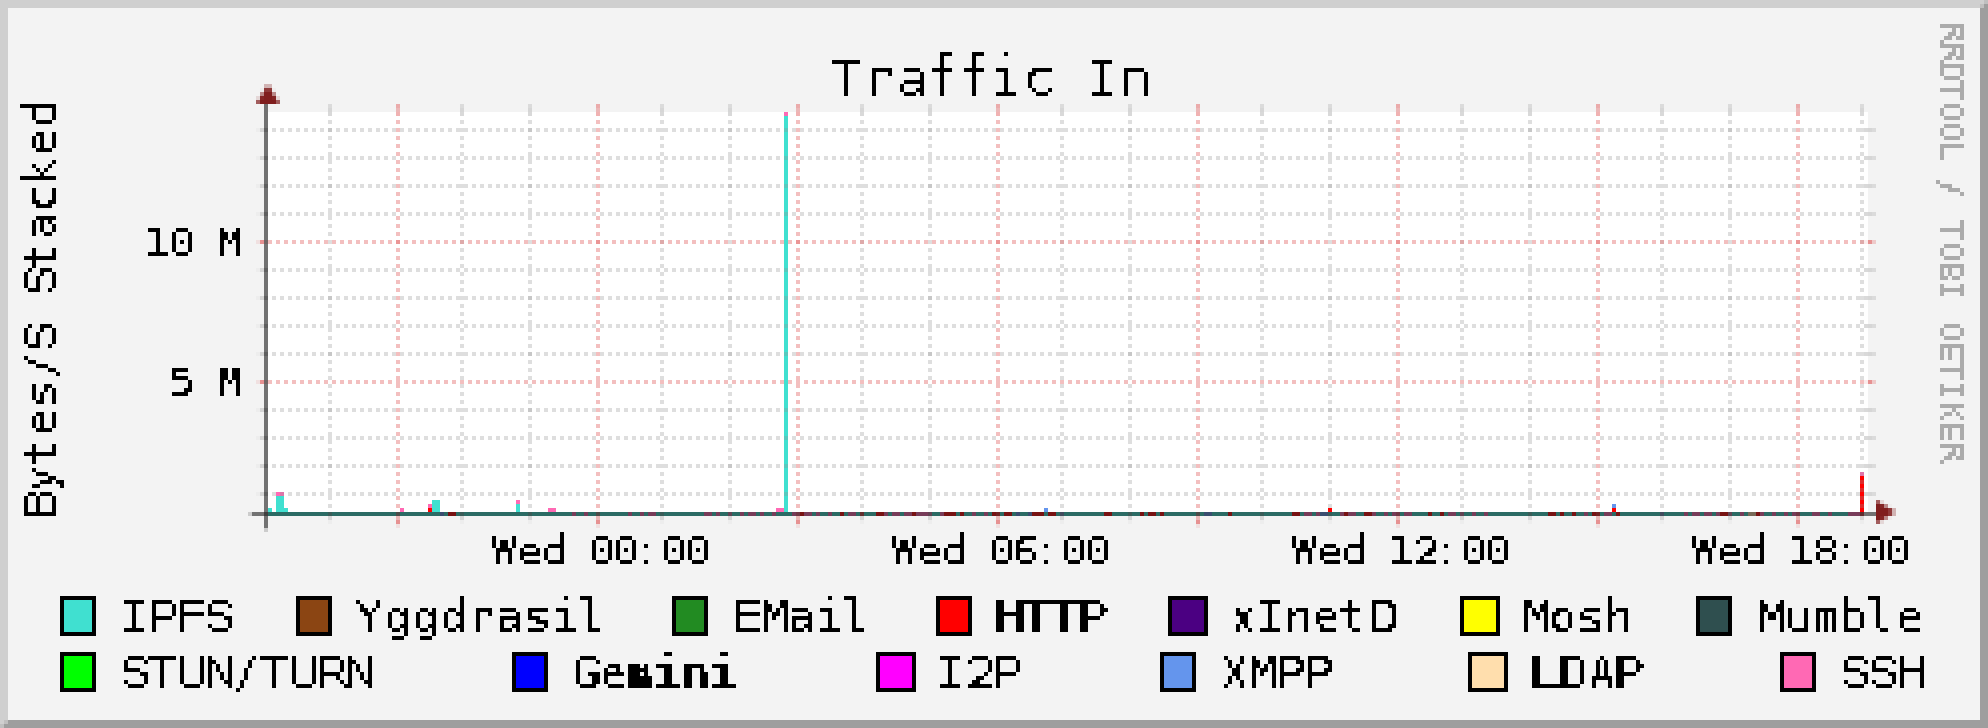 Traffic in graph